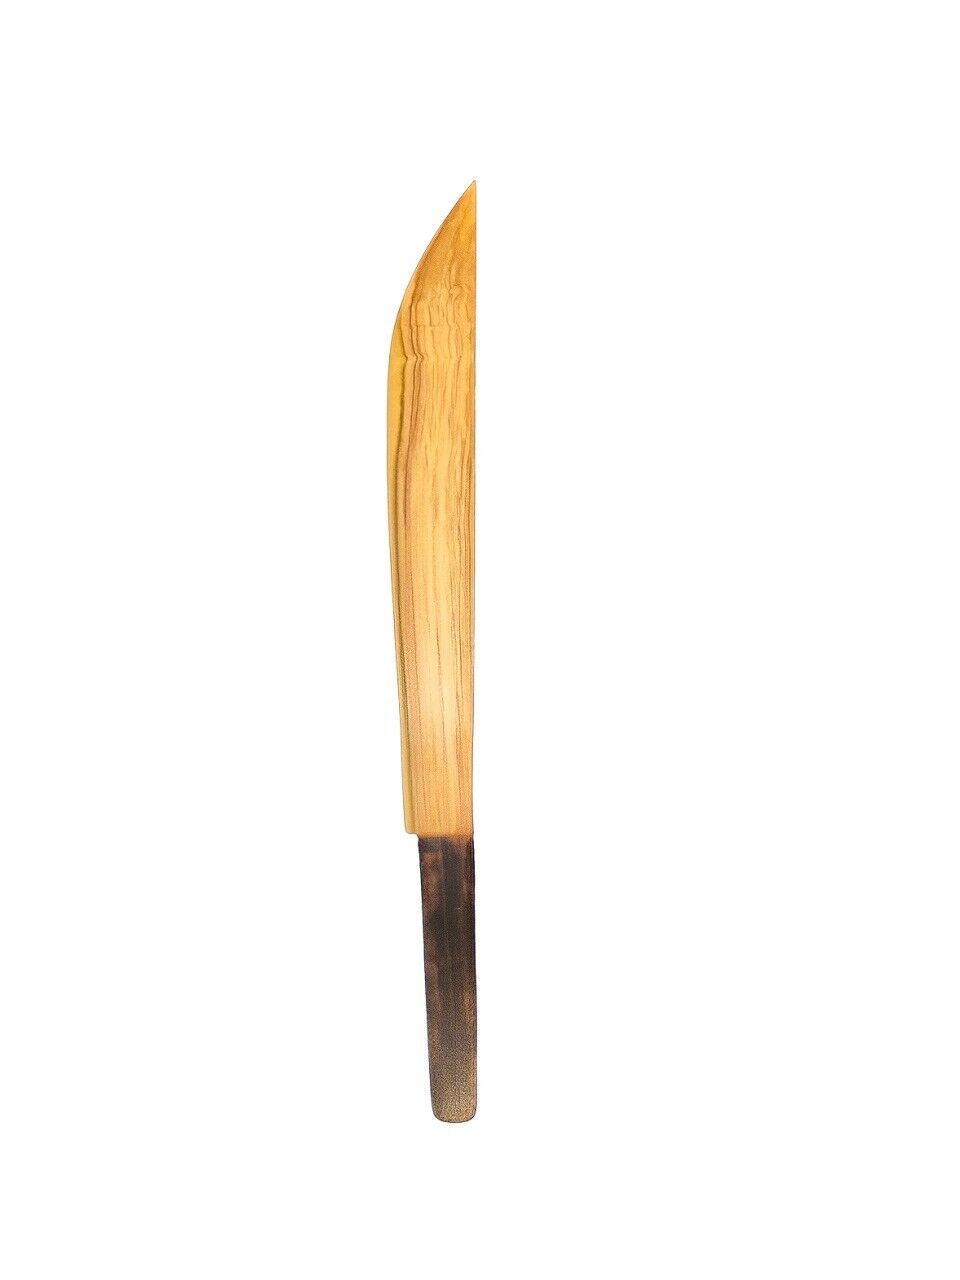 Handmade One Of A Kind Wooden Battle Ready Mini Machete Knife